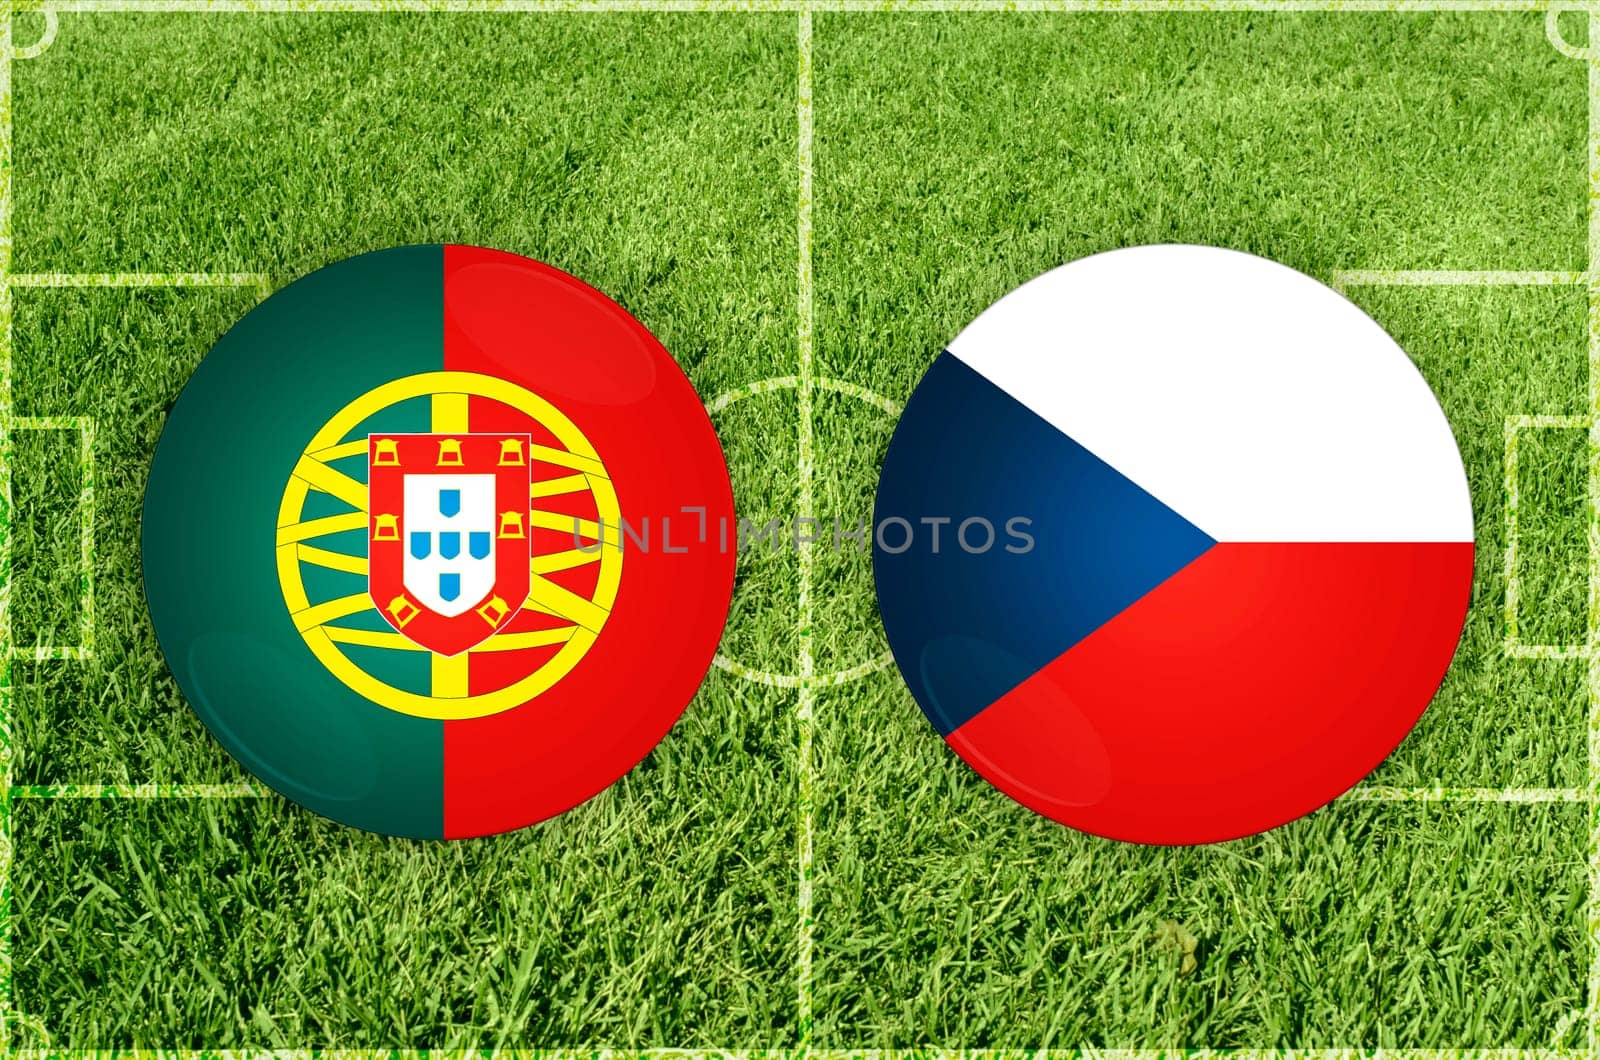 Portugal vs Czechia football match by rusak